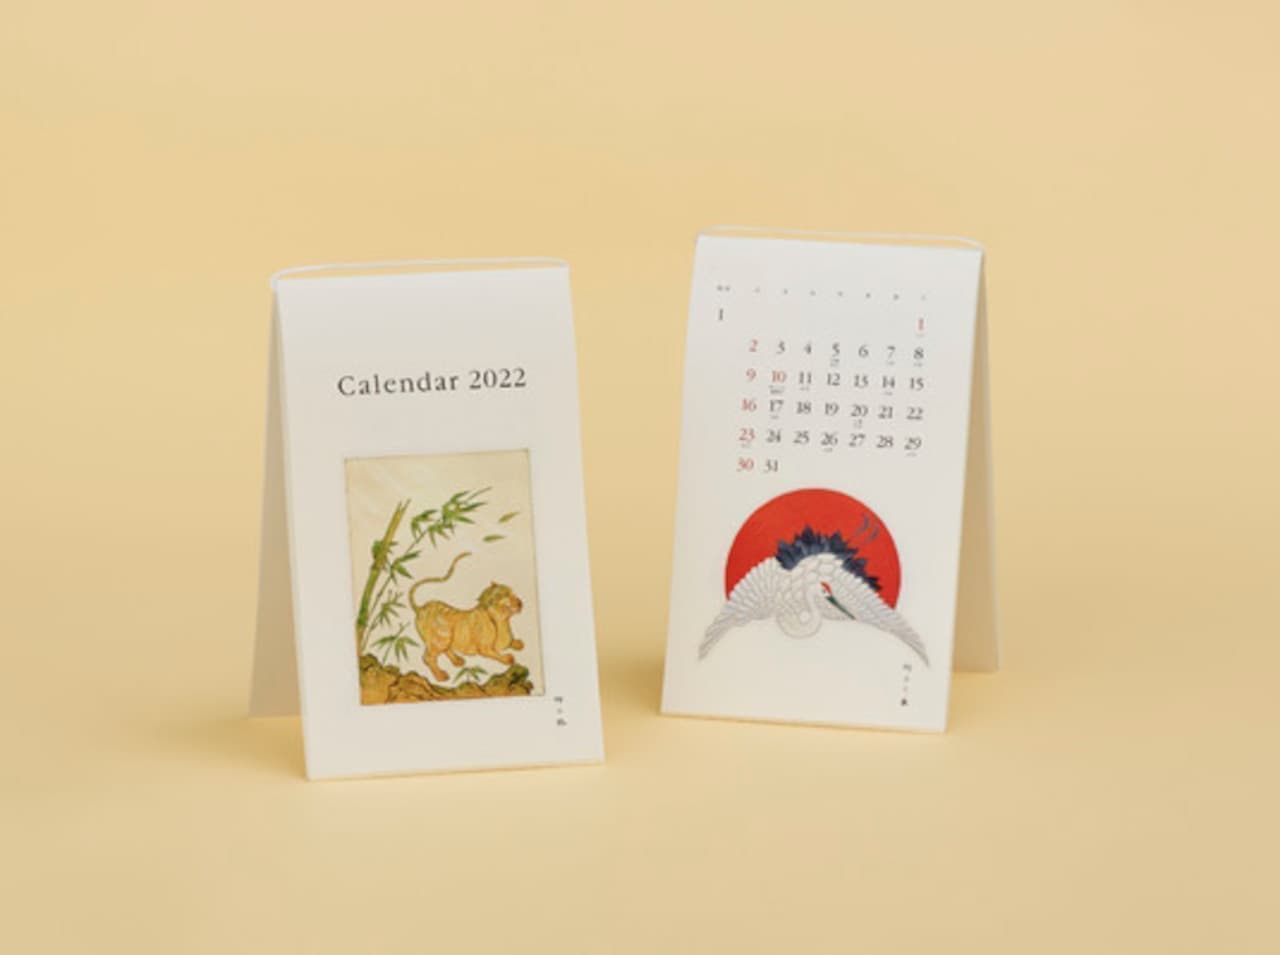 Toraya "Toraya Calendar 2022"